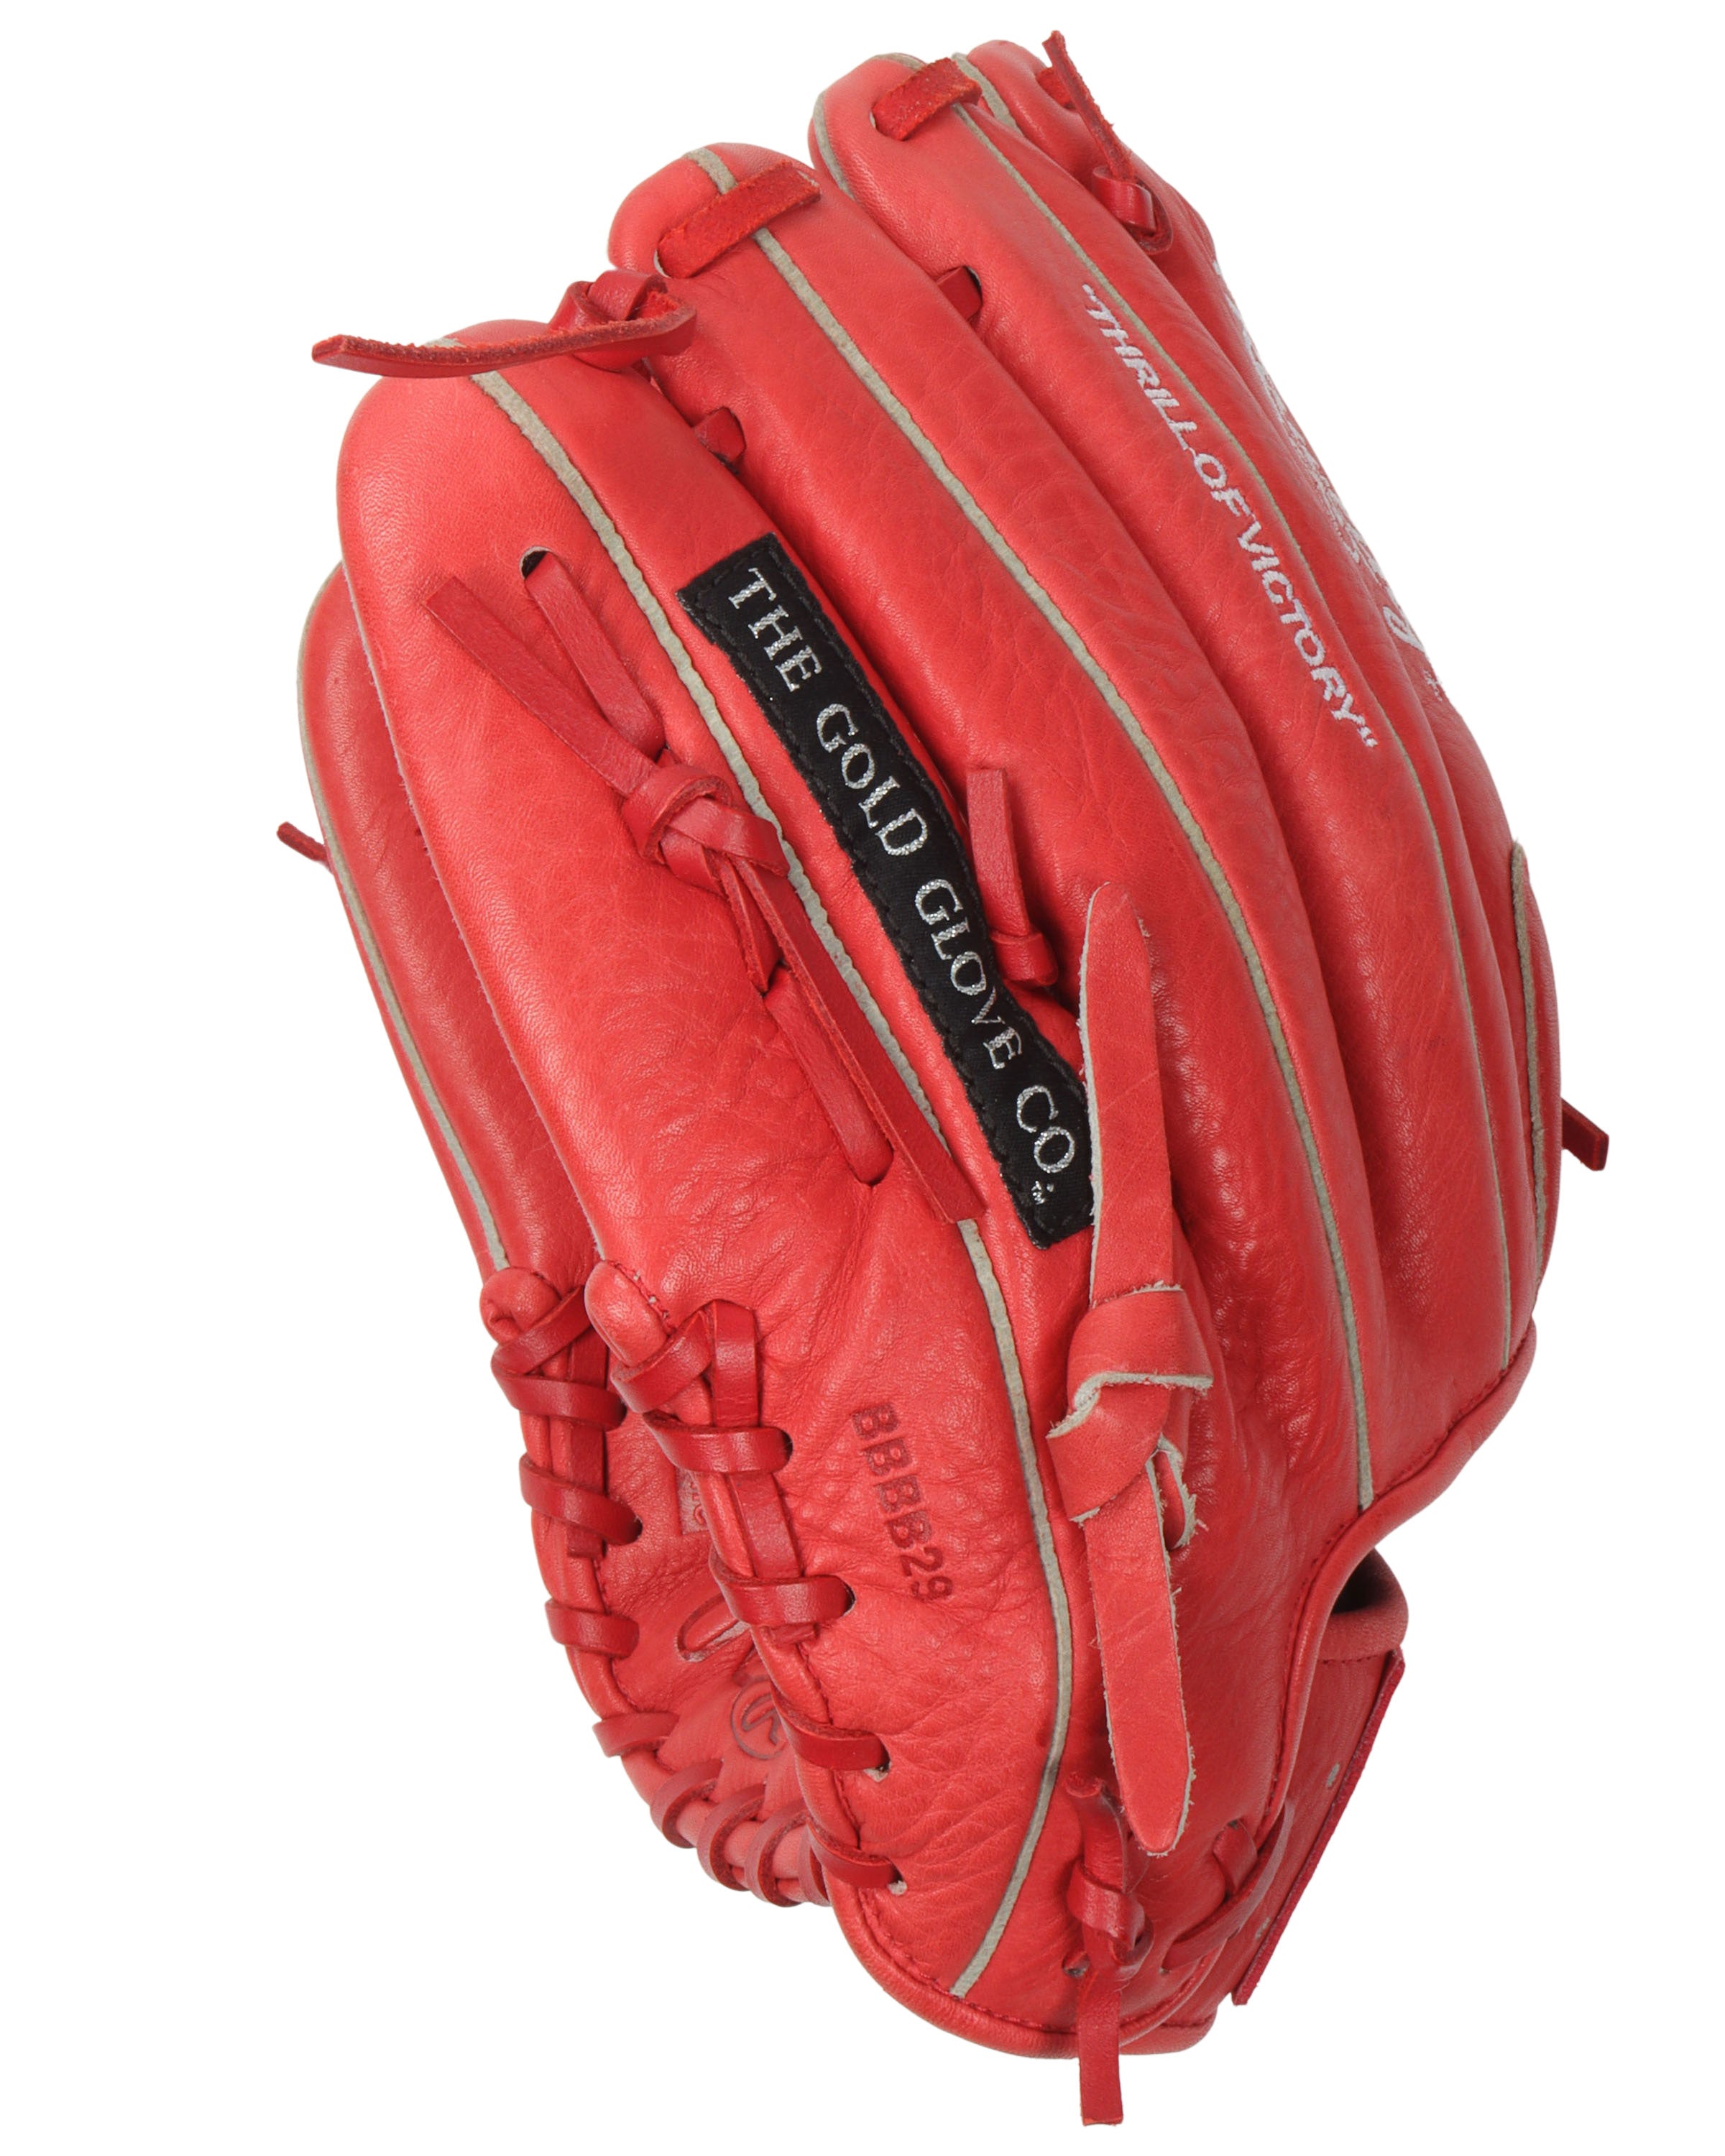 SS12 Rawlings Baseball Glove